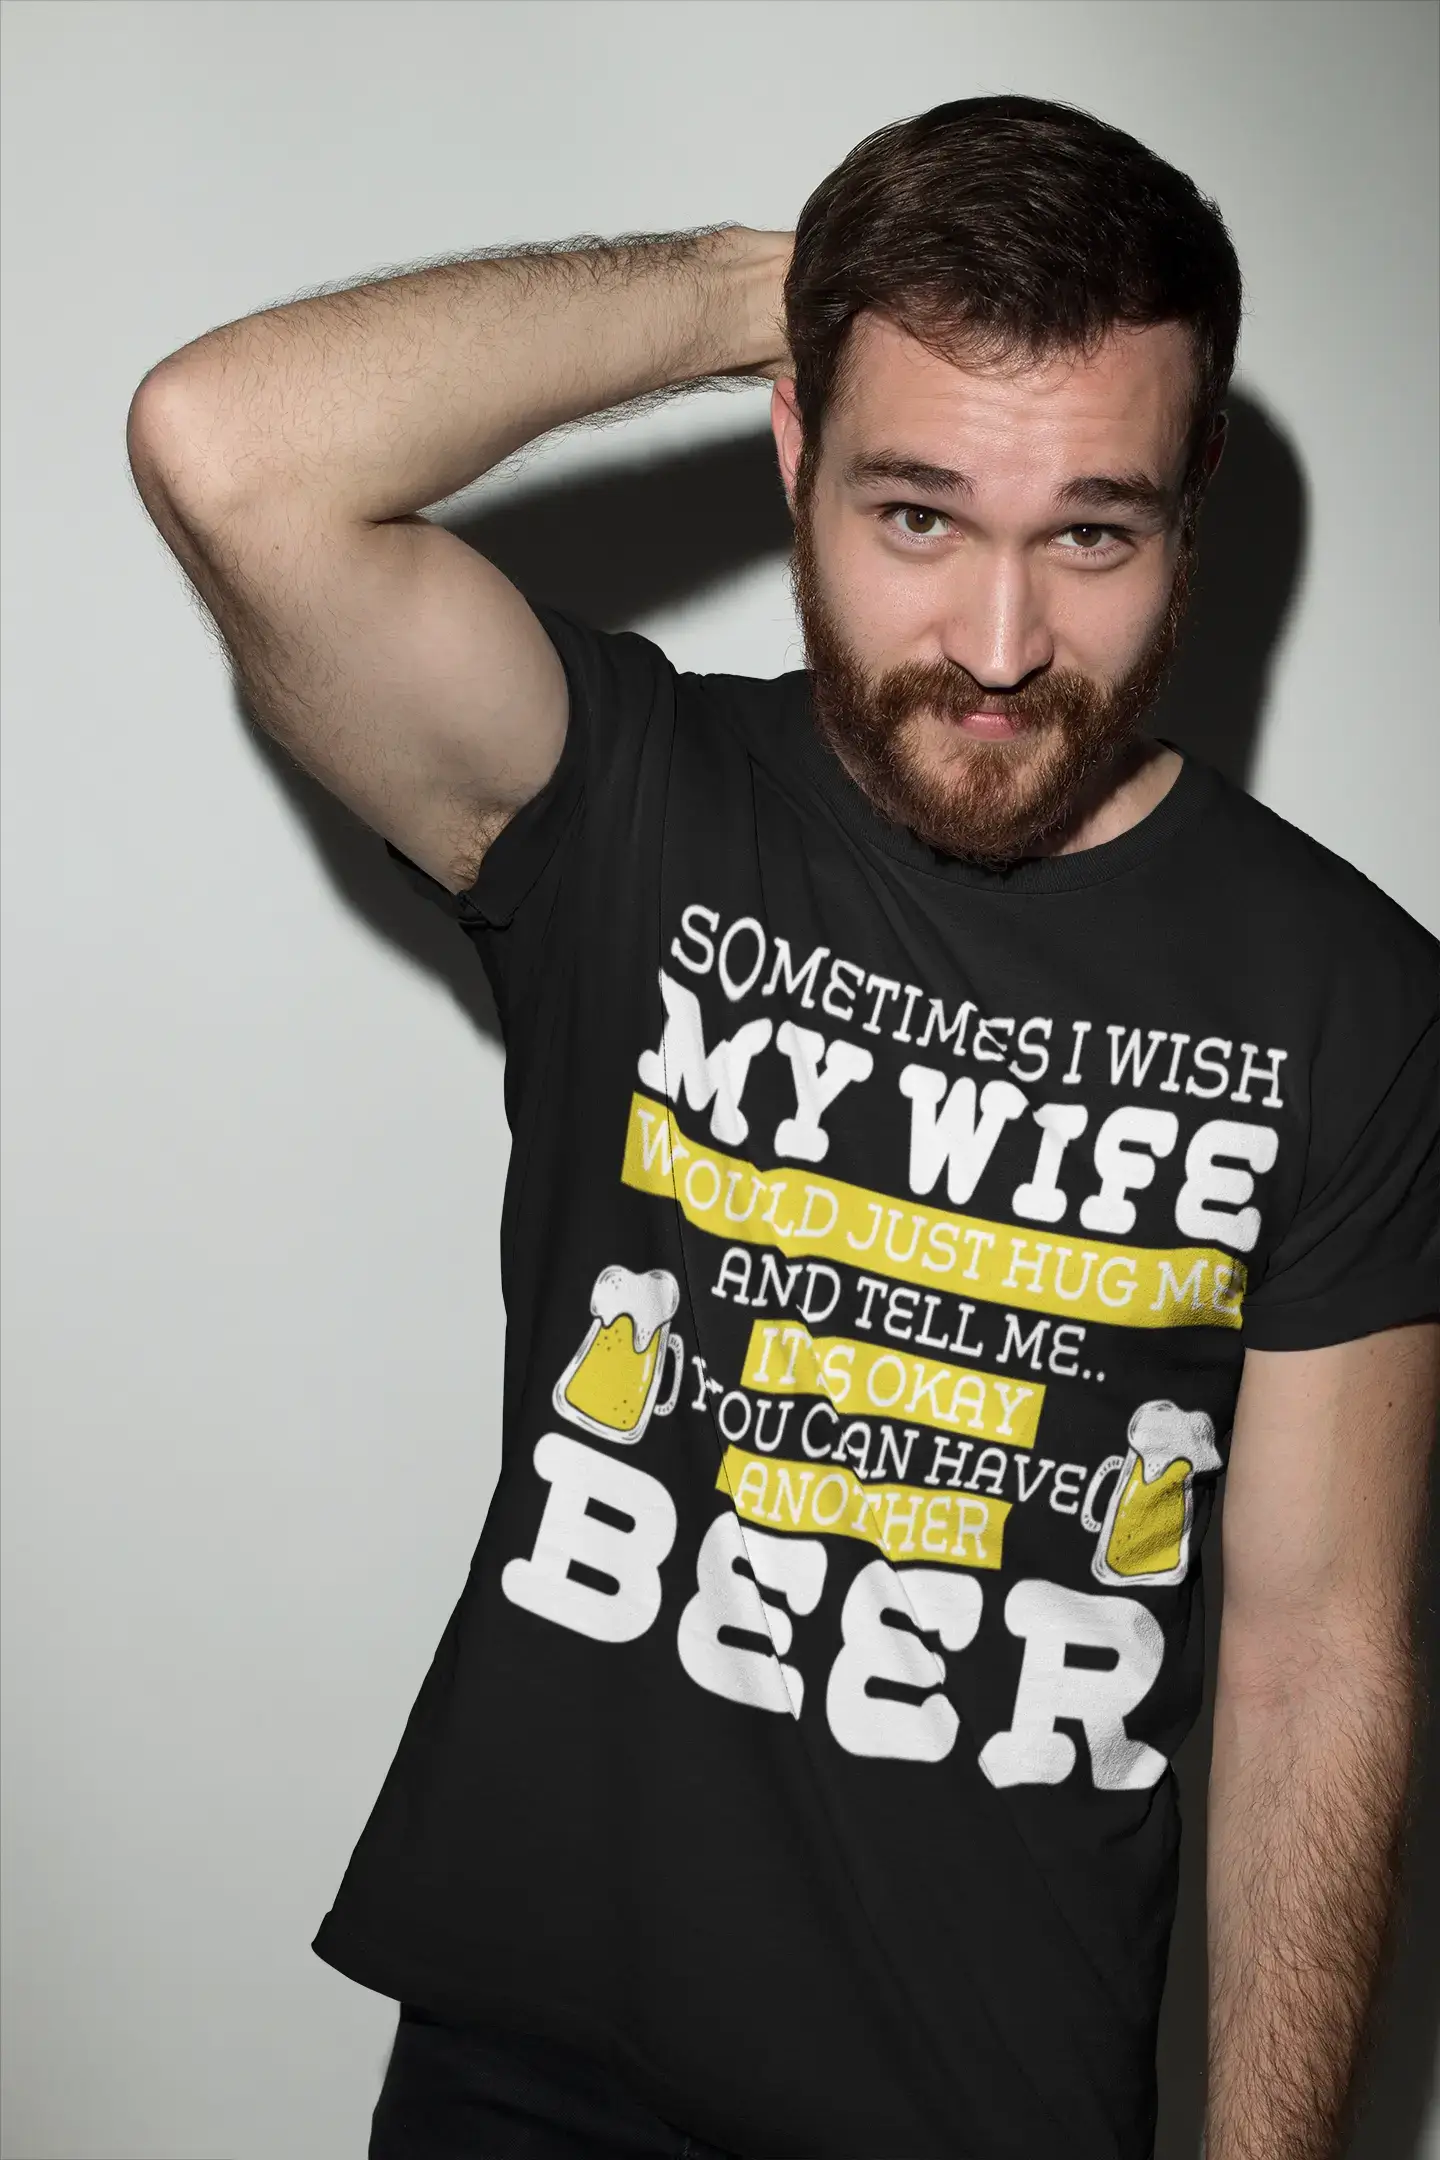 ULTRABASIC Men's Humor T-Shirt Sometimes I Wish My Wife Would Just Hug Me - Funny Joke Beer Lover Tee Shirt